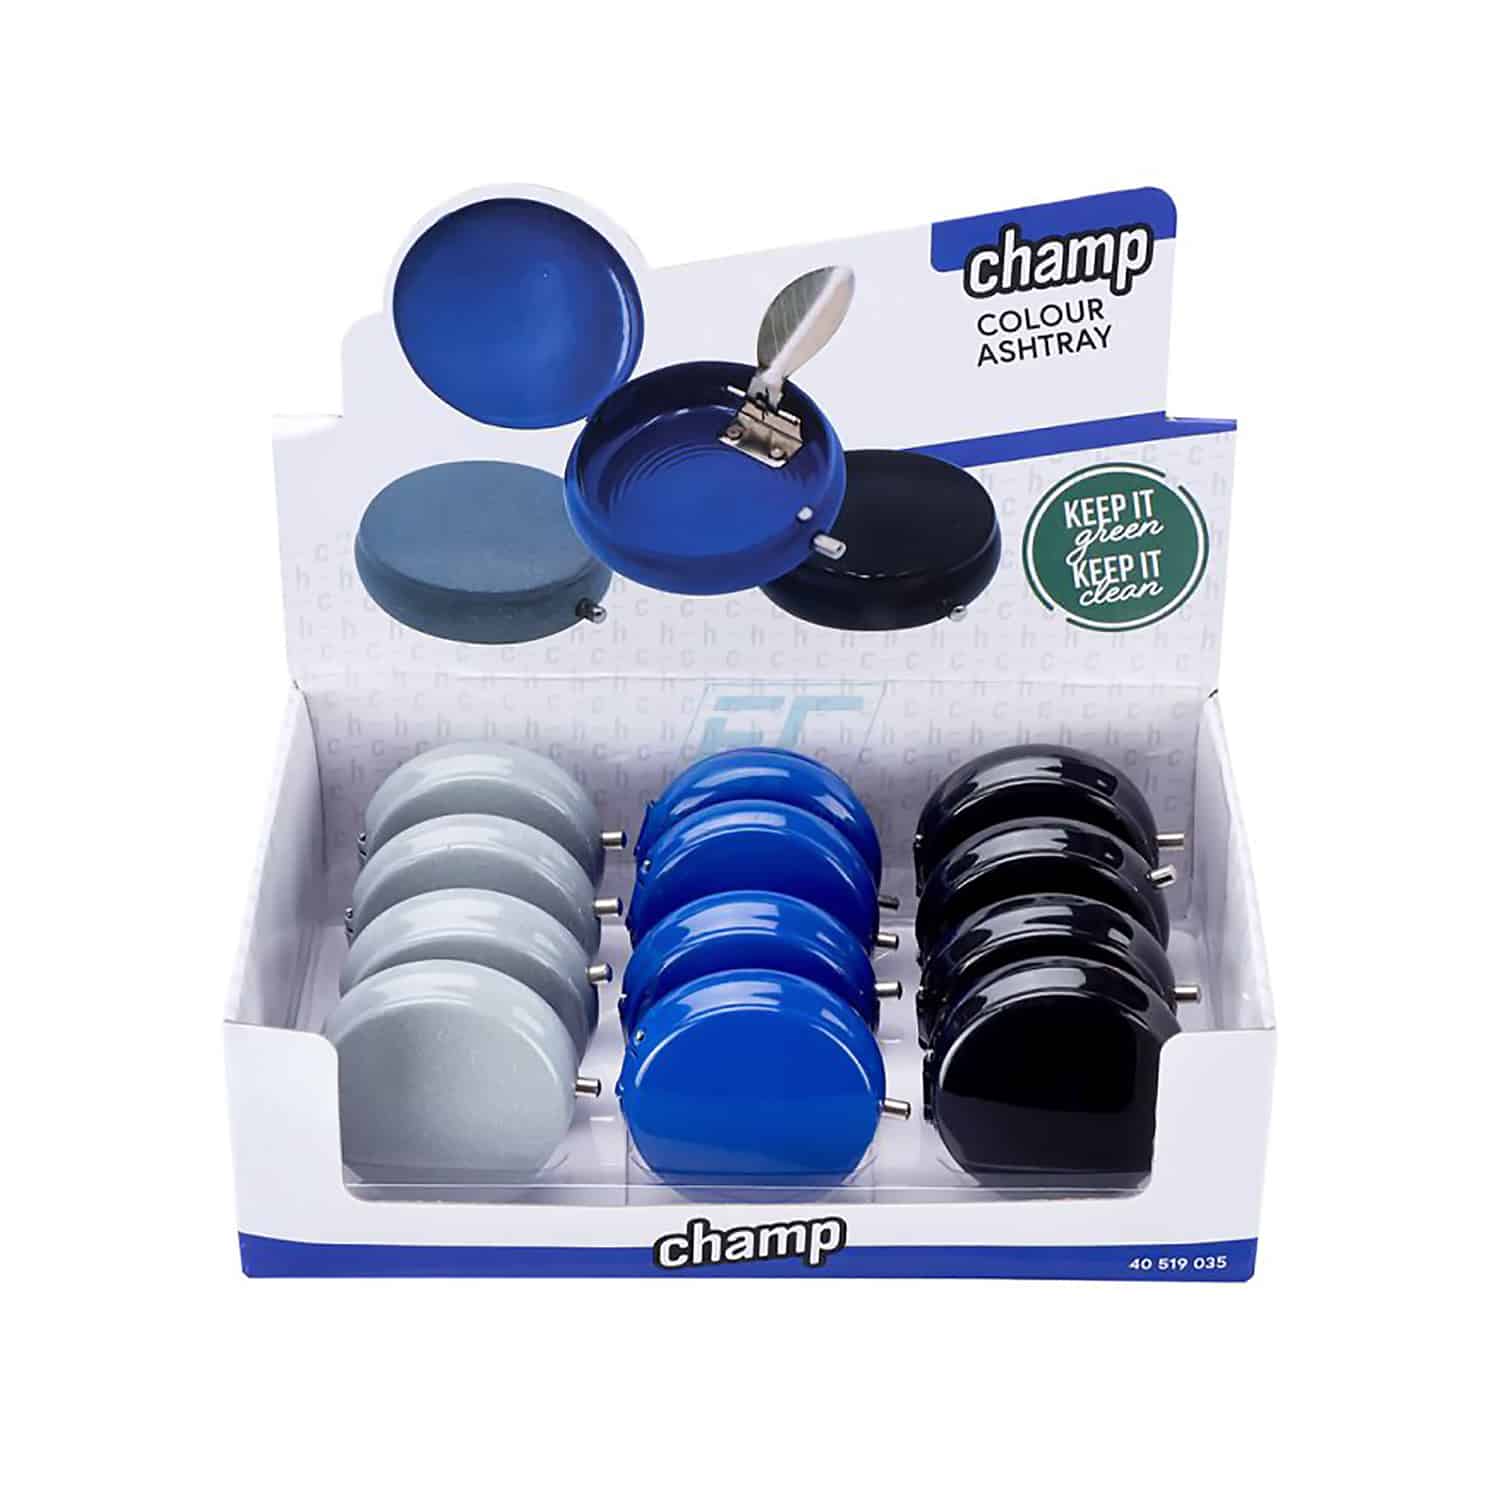 Champ - Μεταλλικό Τασάκι Τσέπης σε Διάφορα Χρώματα (40519035), μπλε, γκρι, μαύρο